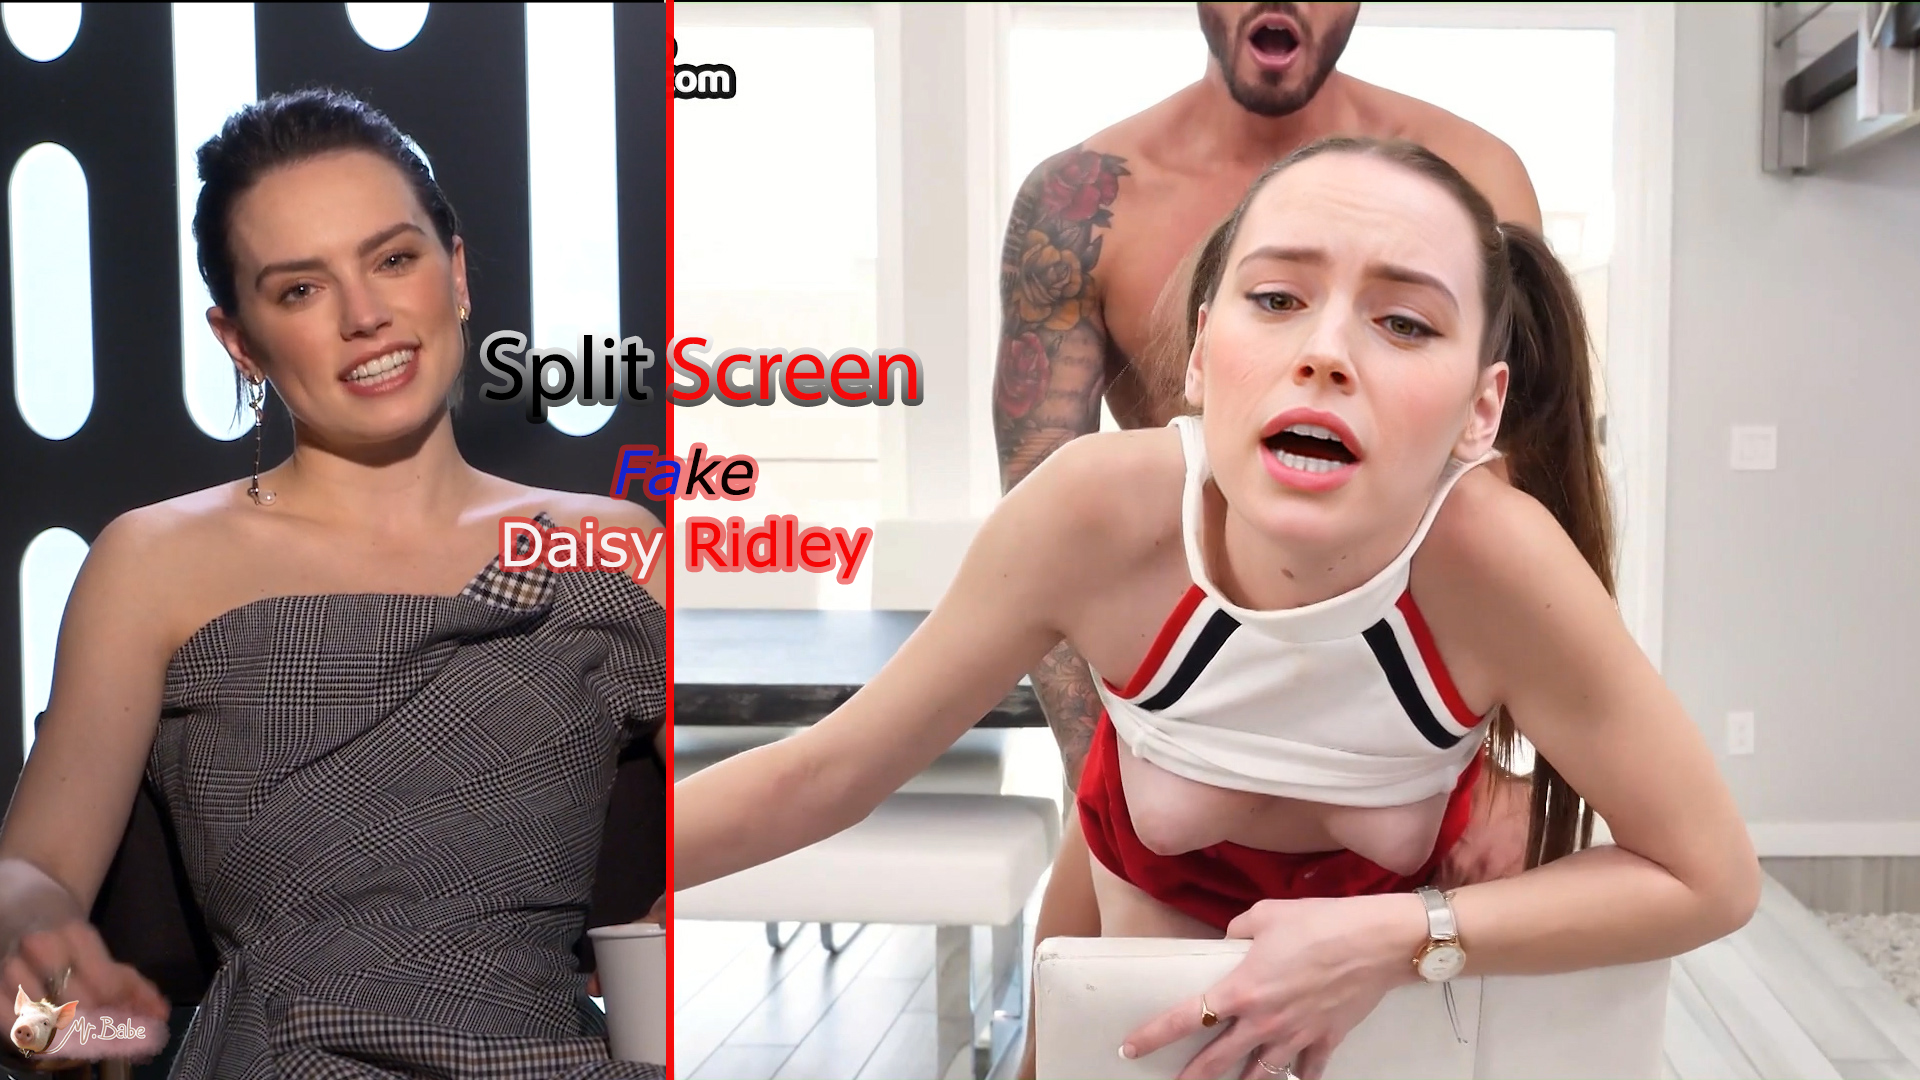 Fake Daisy Ridley -(trailer)- 5 / Split Screen / Free Download